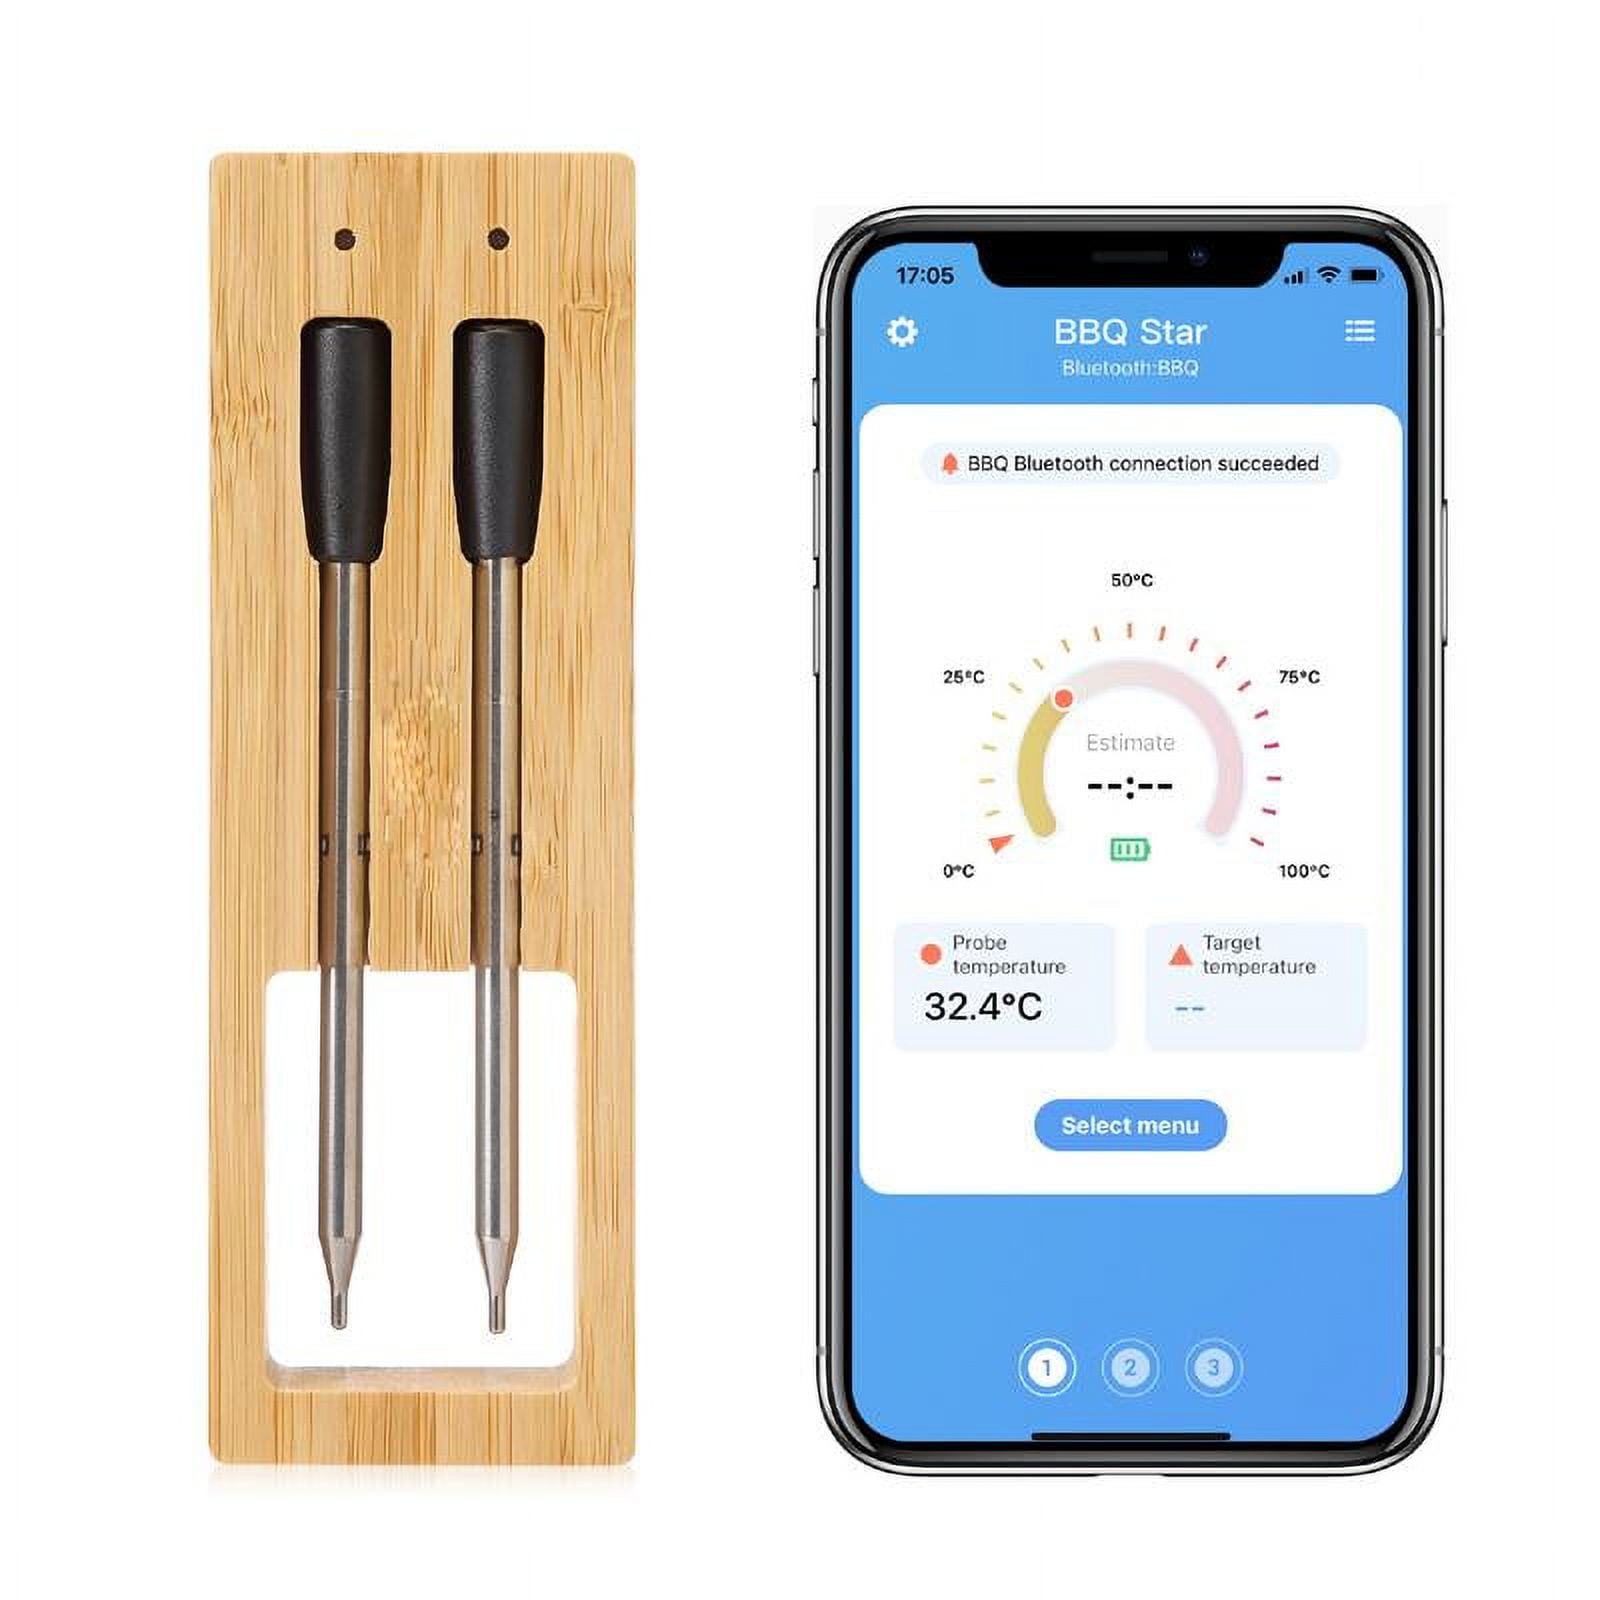 100 Meters Long Range Smart Digital Wireless Outdoor Meat Oven Thermometer  - China Range Smart Wireless Meat Thermometer, Digital Wireless Outdoor  Thermometer